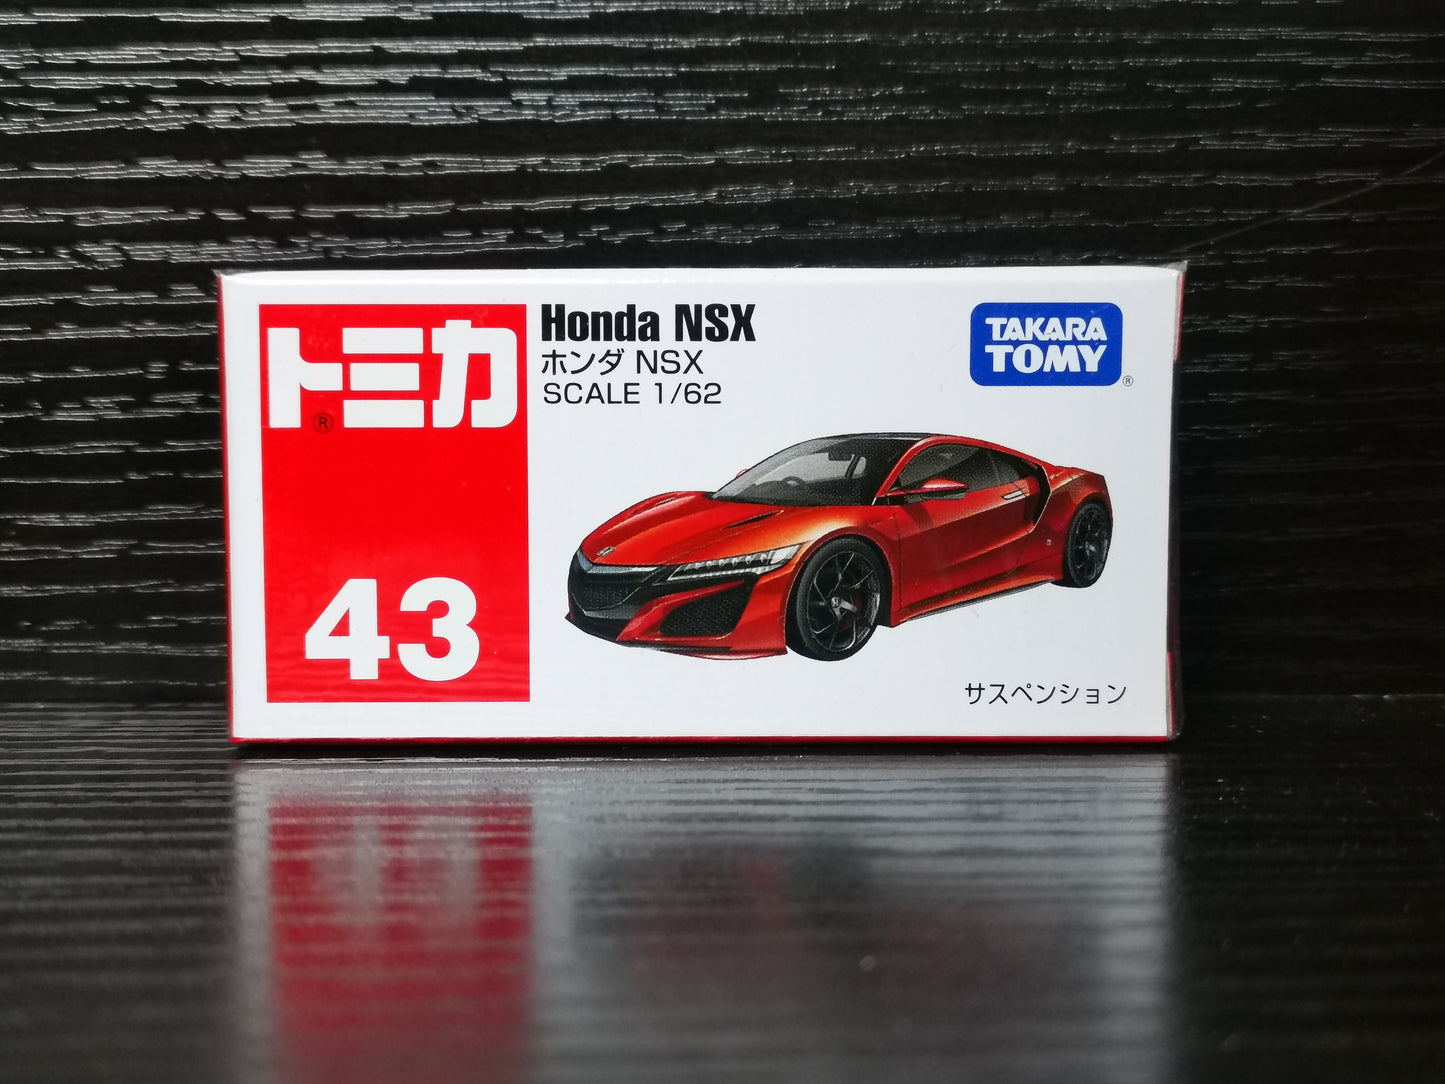 Tomica #43
Honda New NSX ACURA